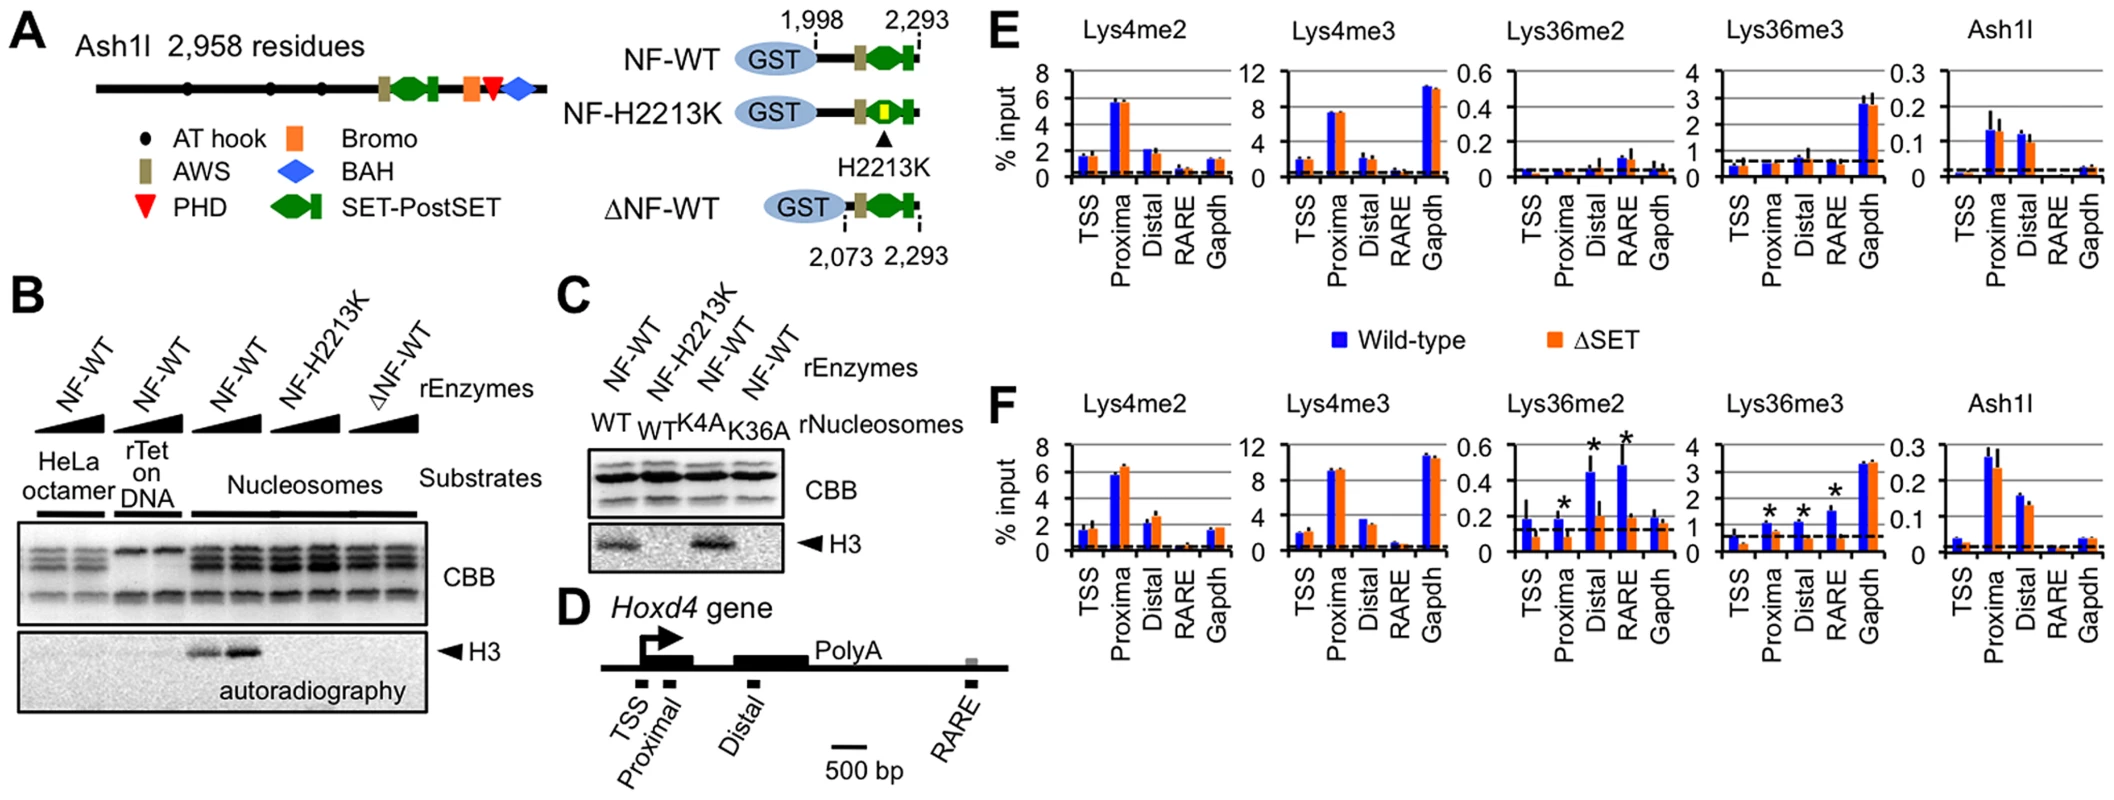 Ash1l specifically methylates Lys36 of histone H3 both <i>in vitro</i> and <i>in vivo</i>.